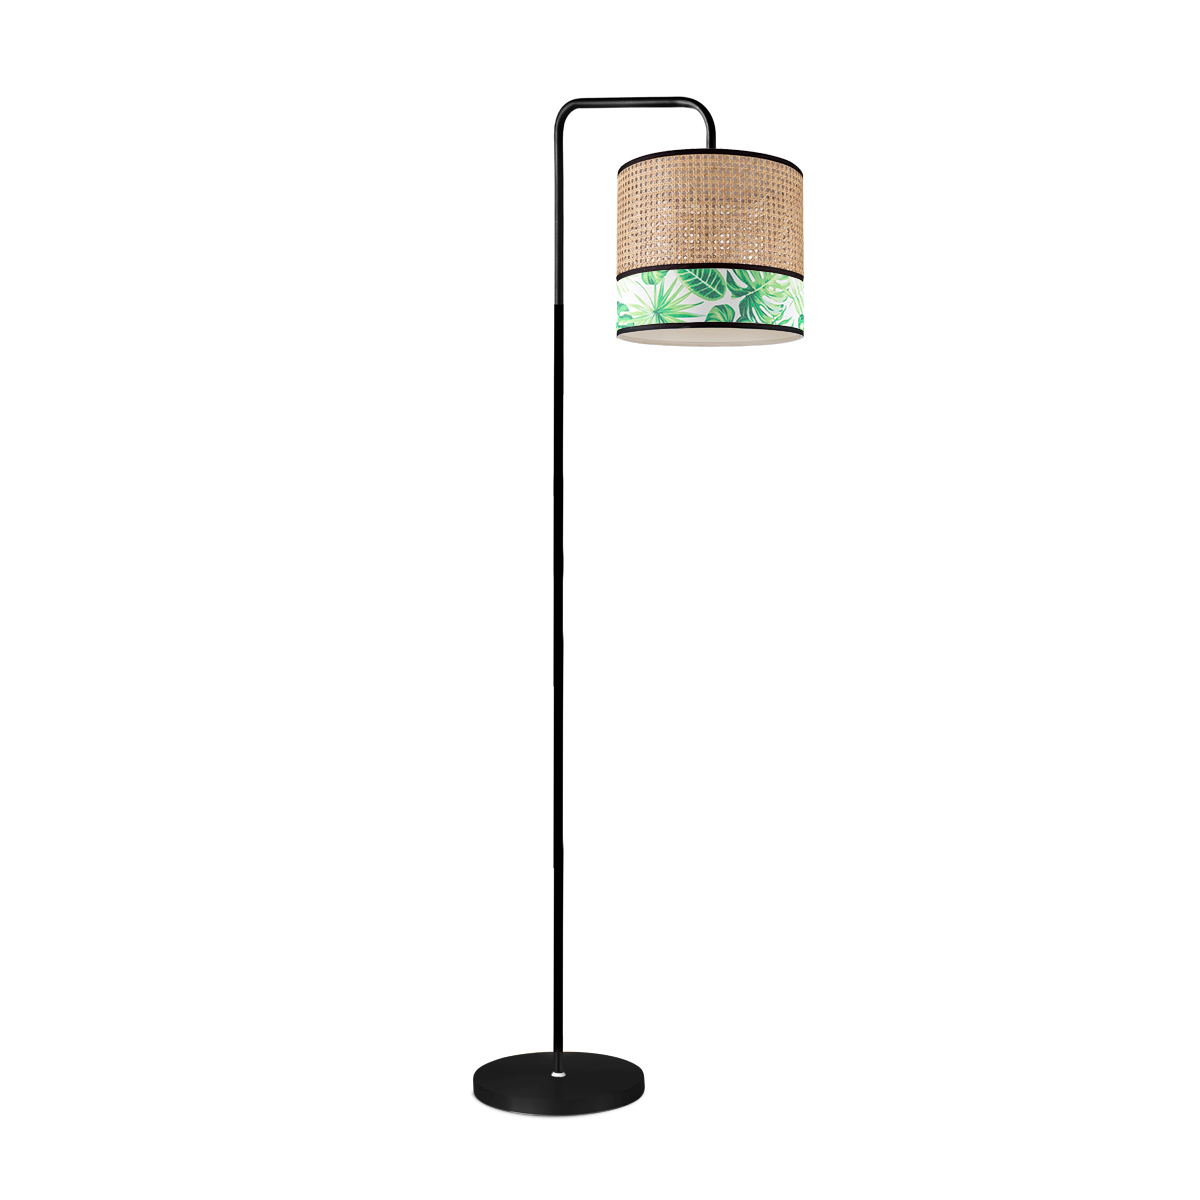 Tangla lighting - TLF7011-30A - LED Floor lamp 1 Light - metal + rattan + TC fabric - spring - sieben leaf - E27